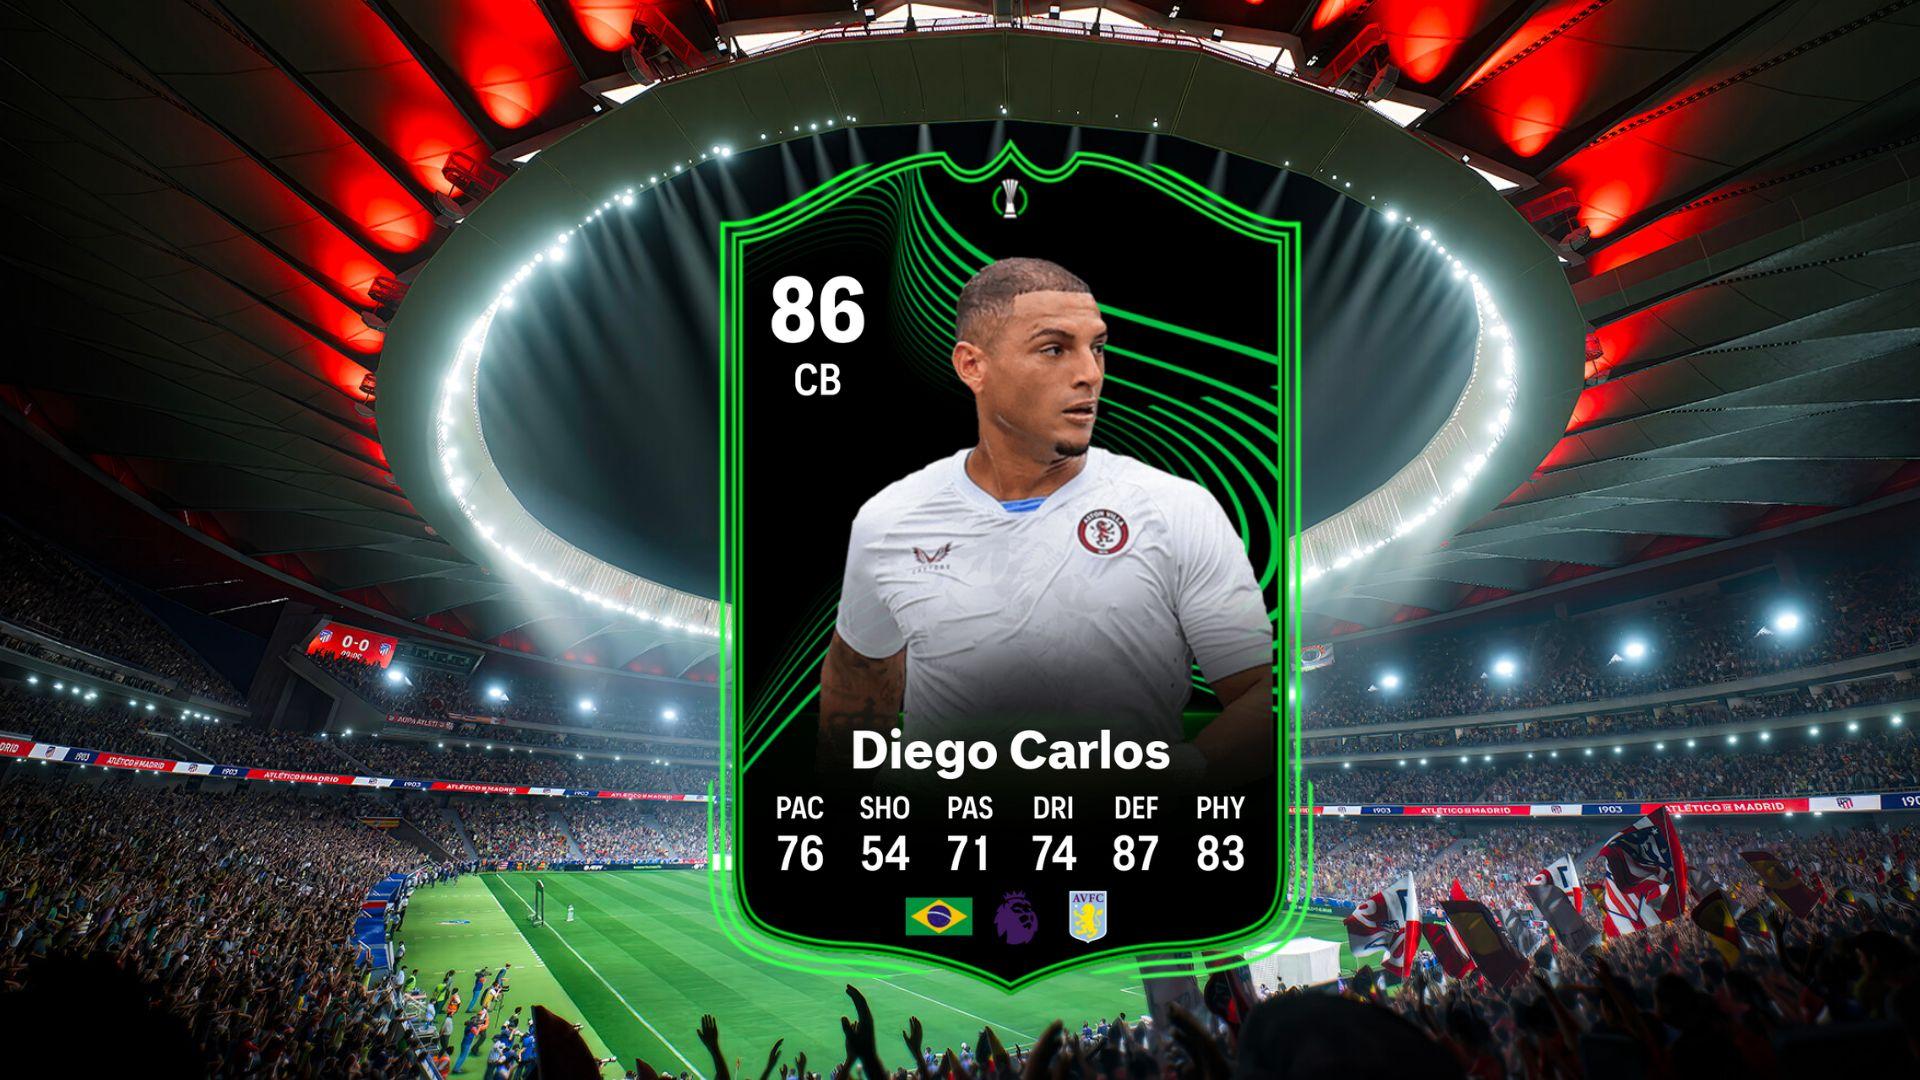 Diego Carlos RTTK card with stadium in background